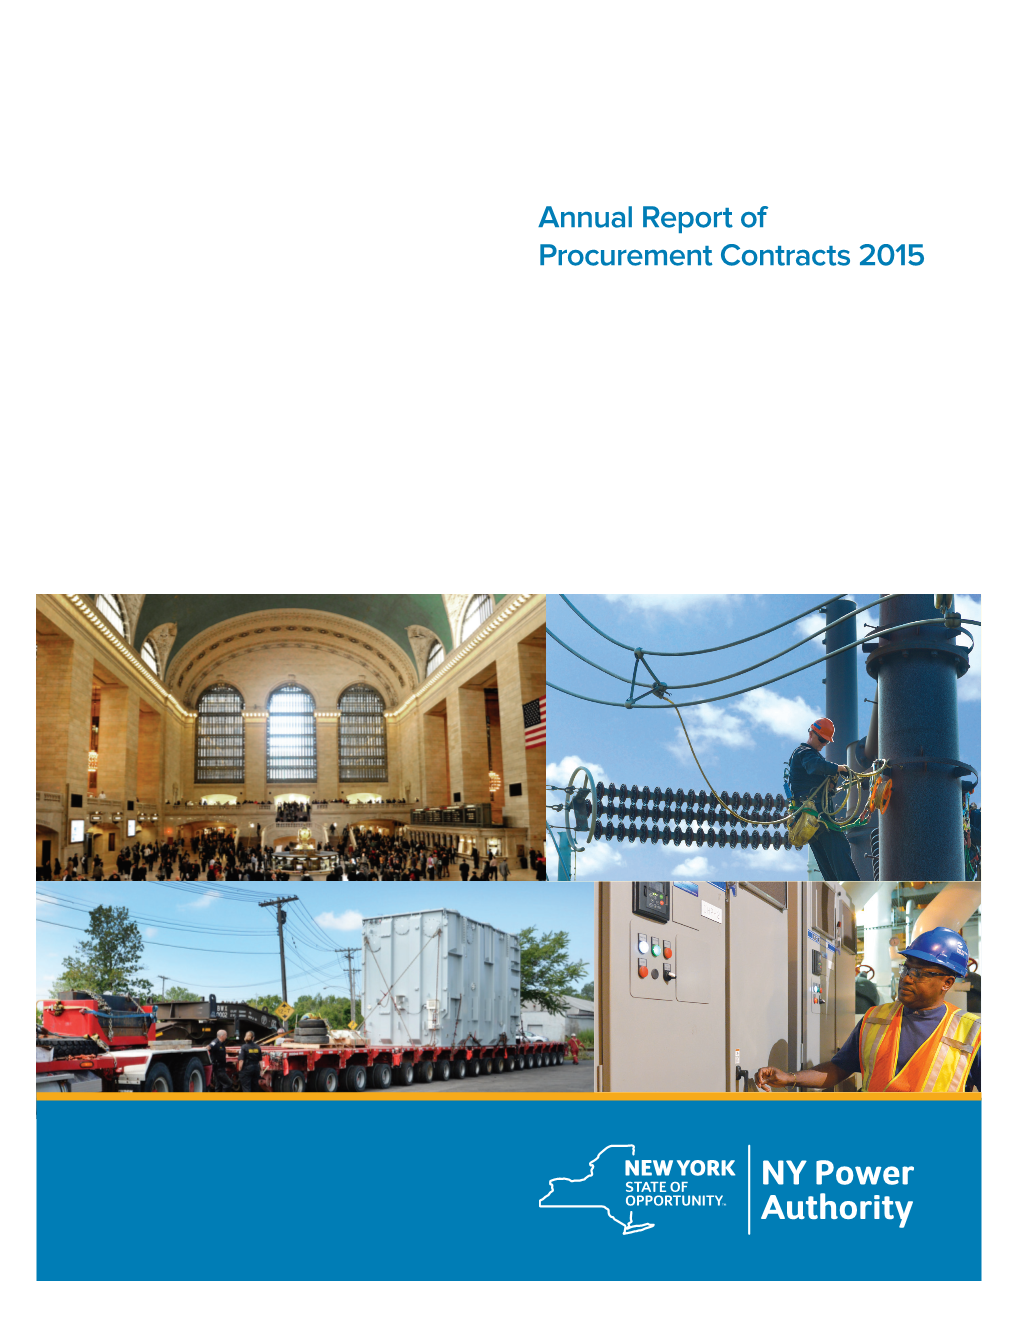 Annual Report of Procurement Contracts V.1.Xlsx